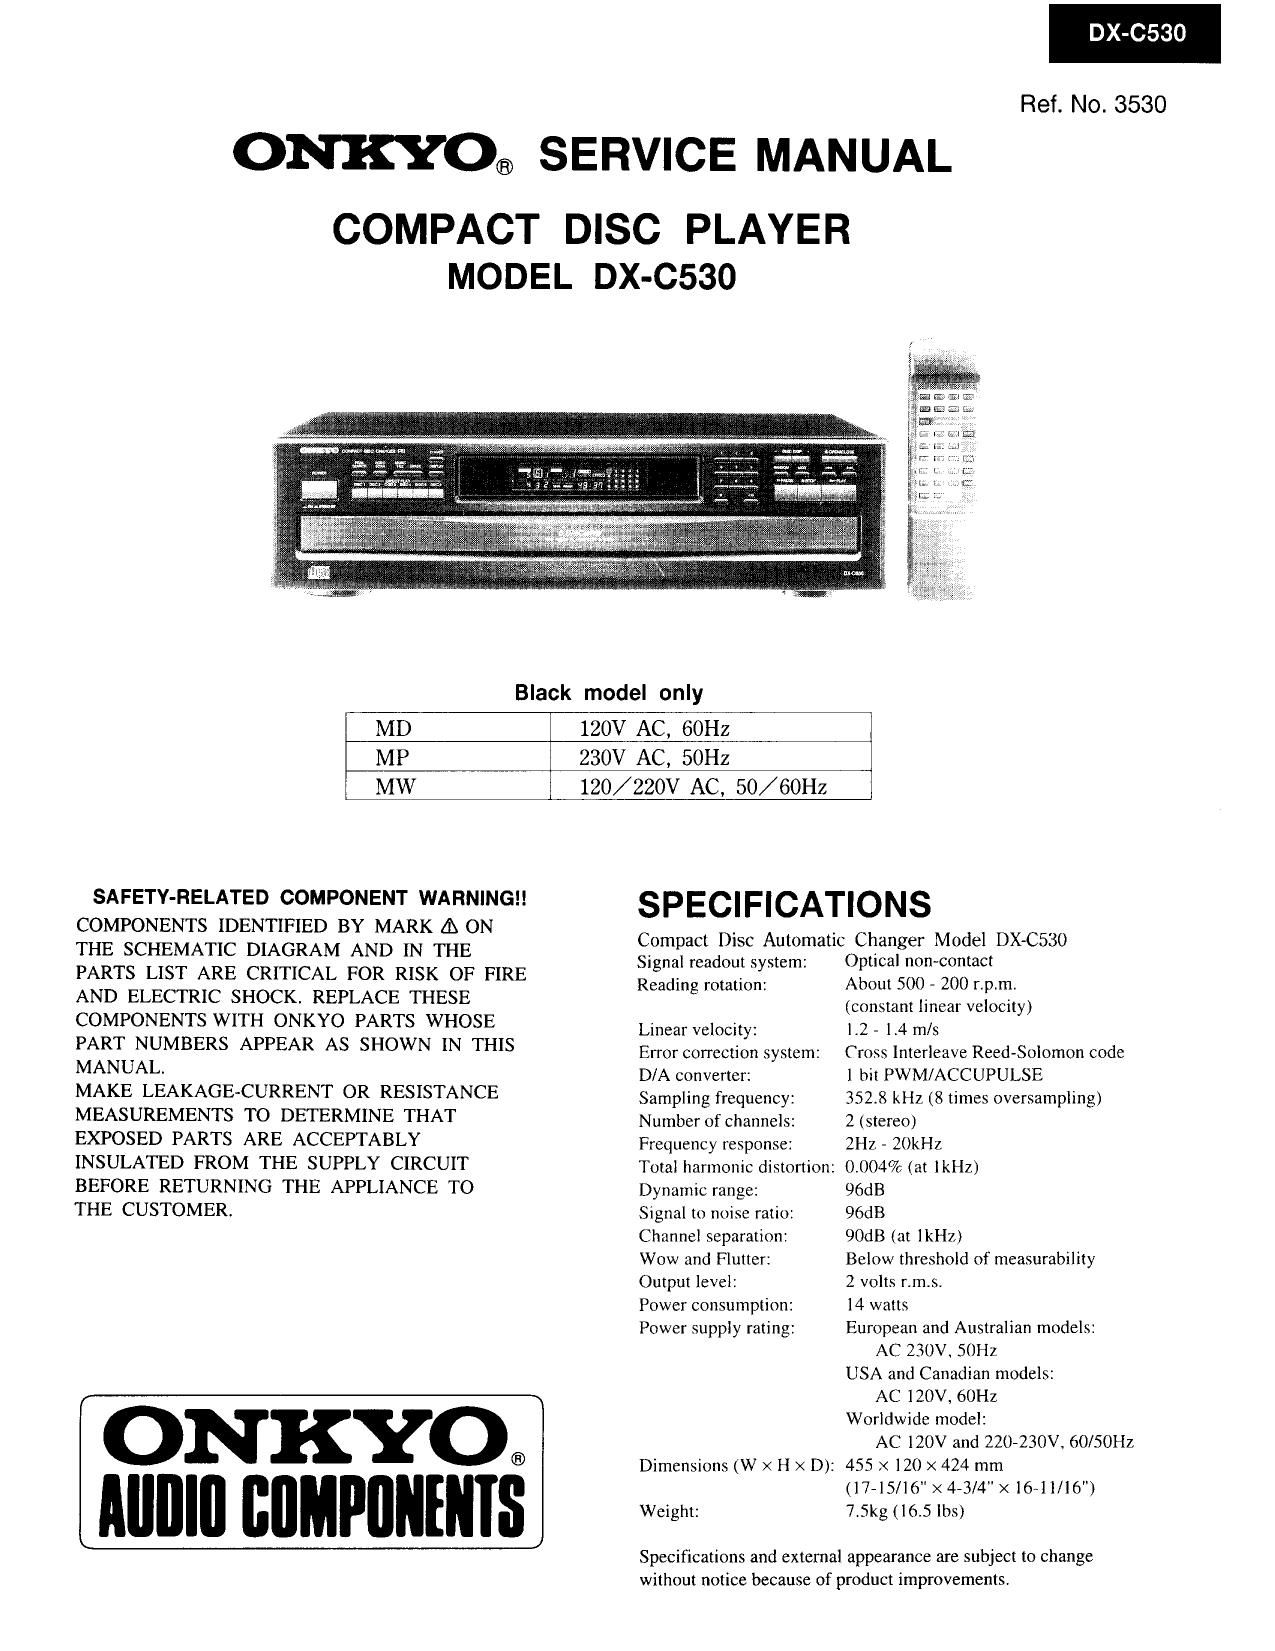 Onkyo DXC 530 Service Manual